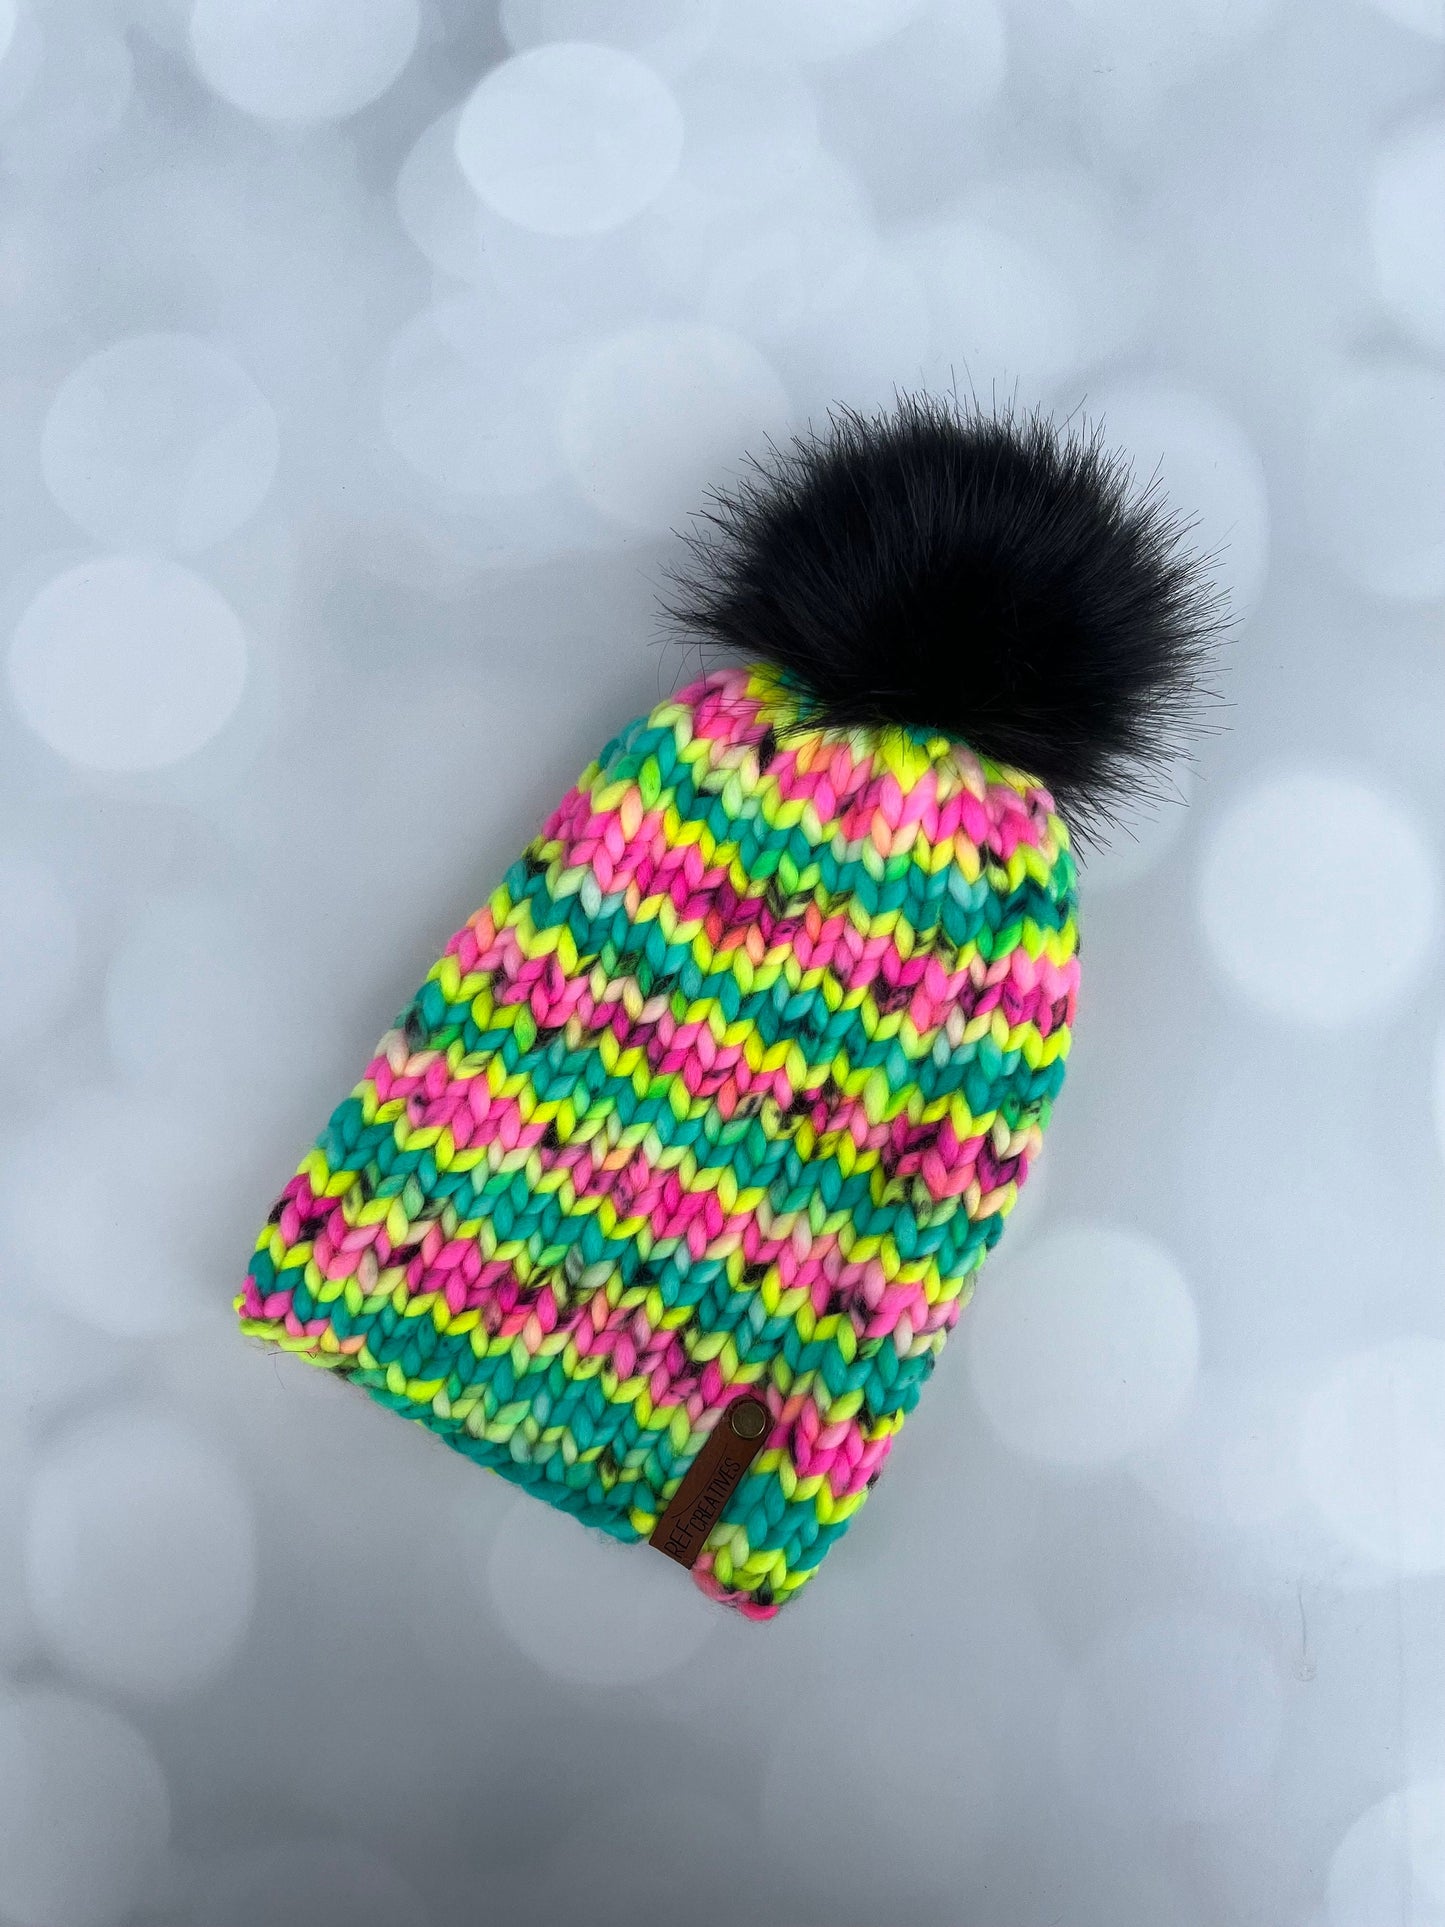 Luxury Neon Merino Wool Knit Hat - Boombox Neon Beanie Hand Knit Hat with Hand Dyed Yarn